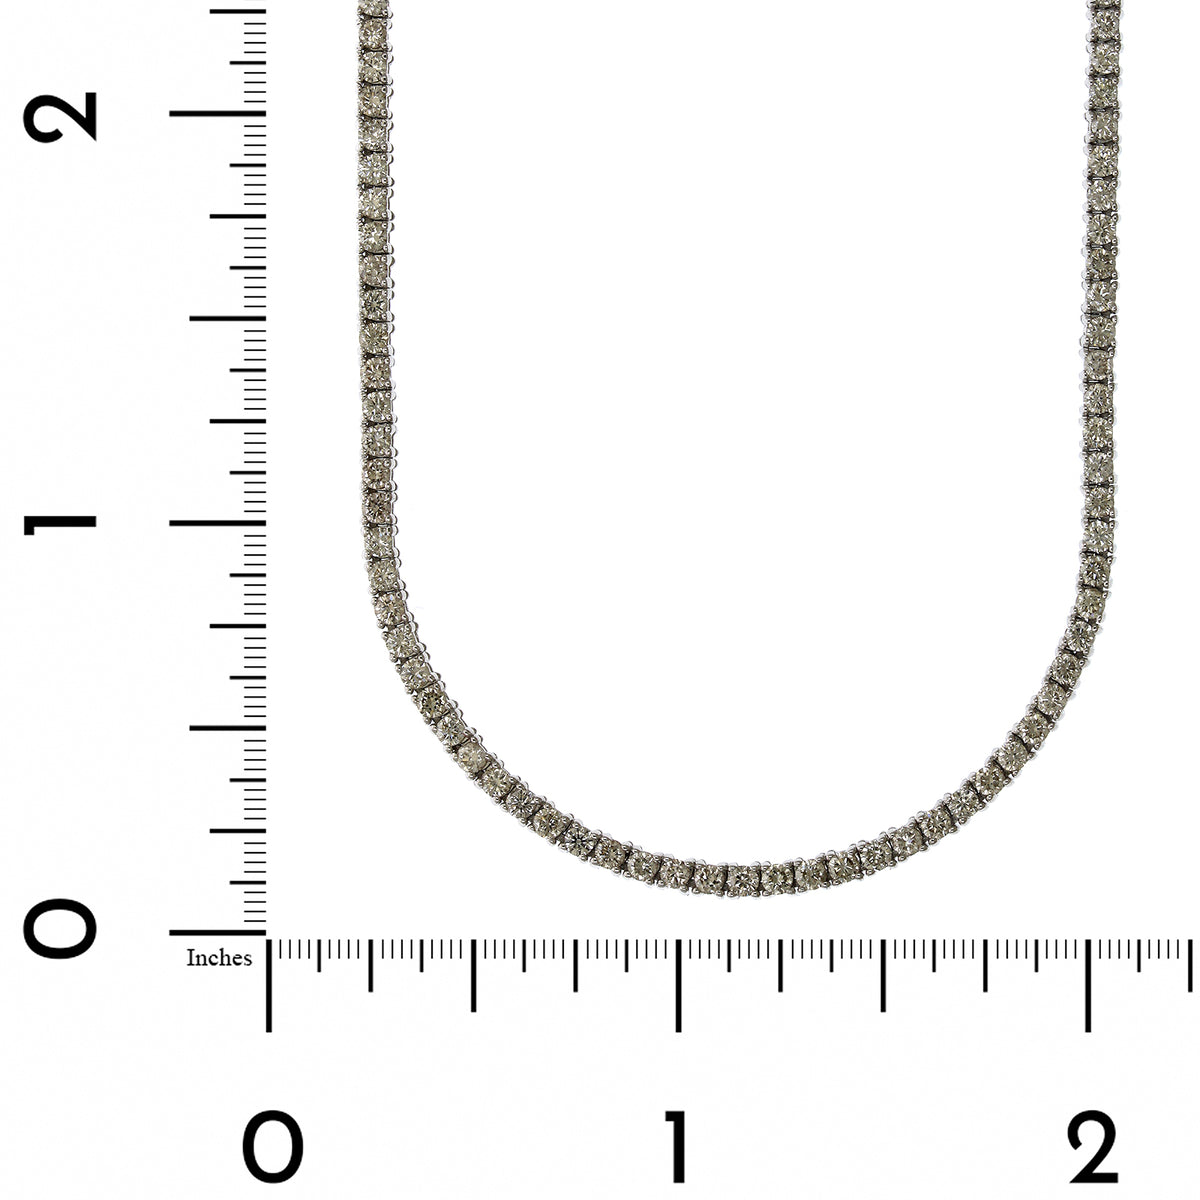 14K White Gold 4 Prong Diamond Line Necklace